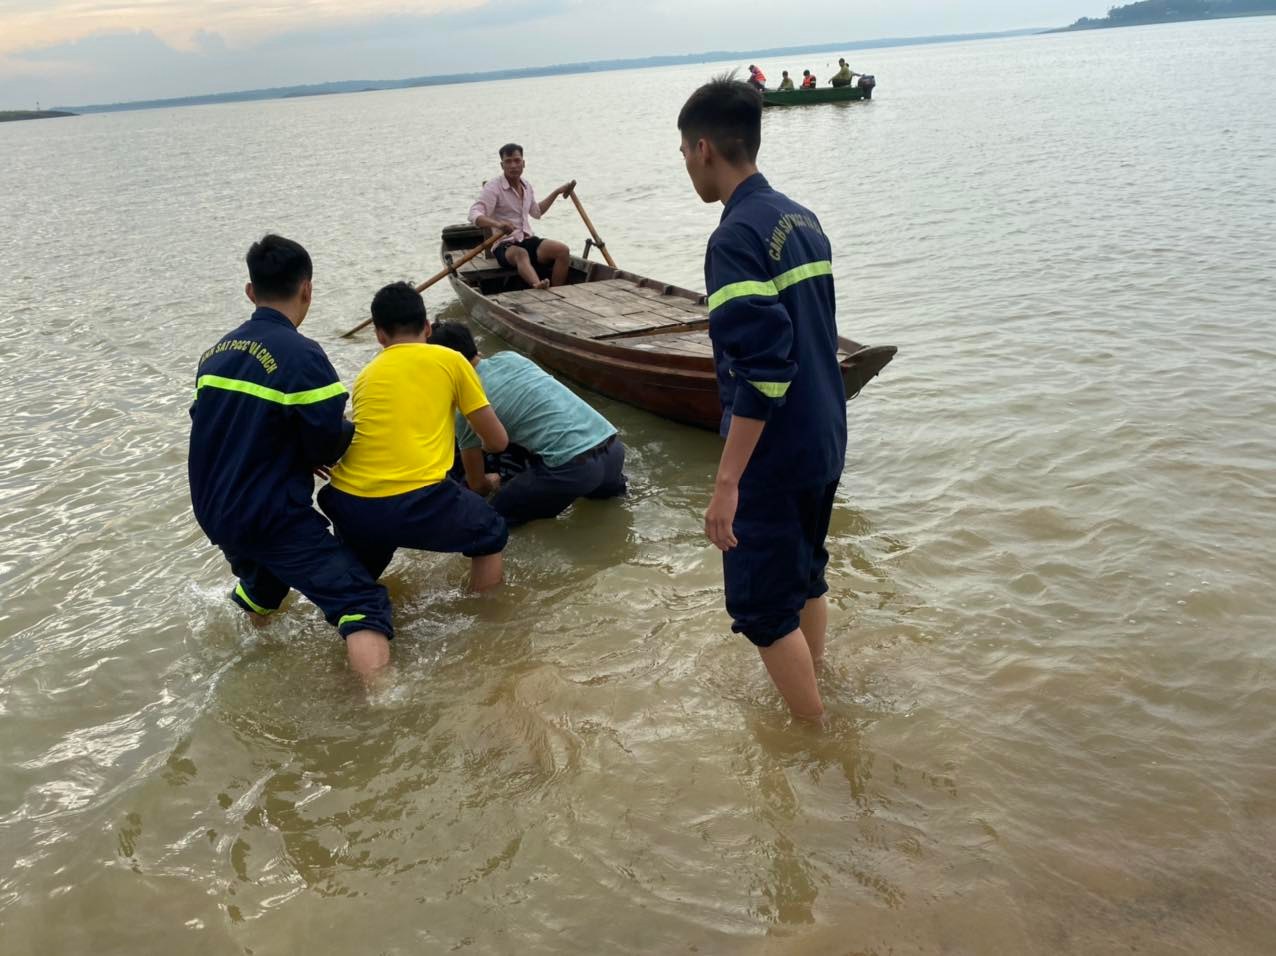 Teenagers, child drown in reservoir in southern Vietnam